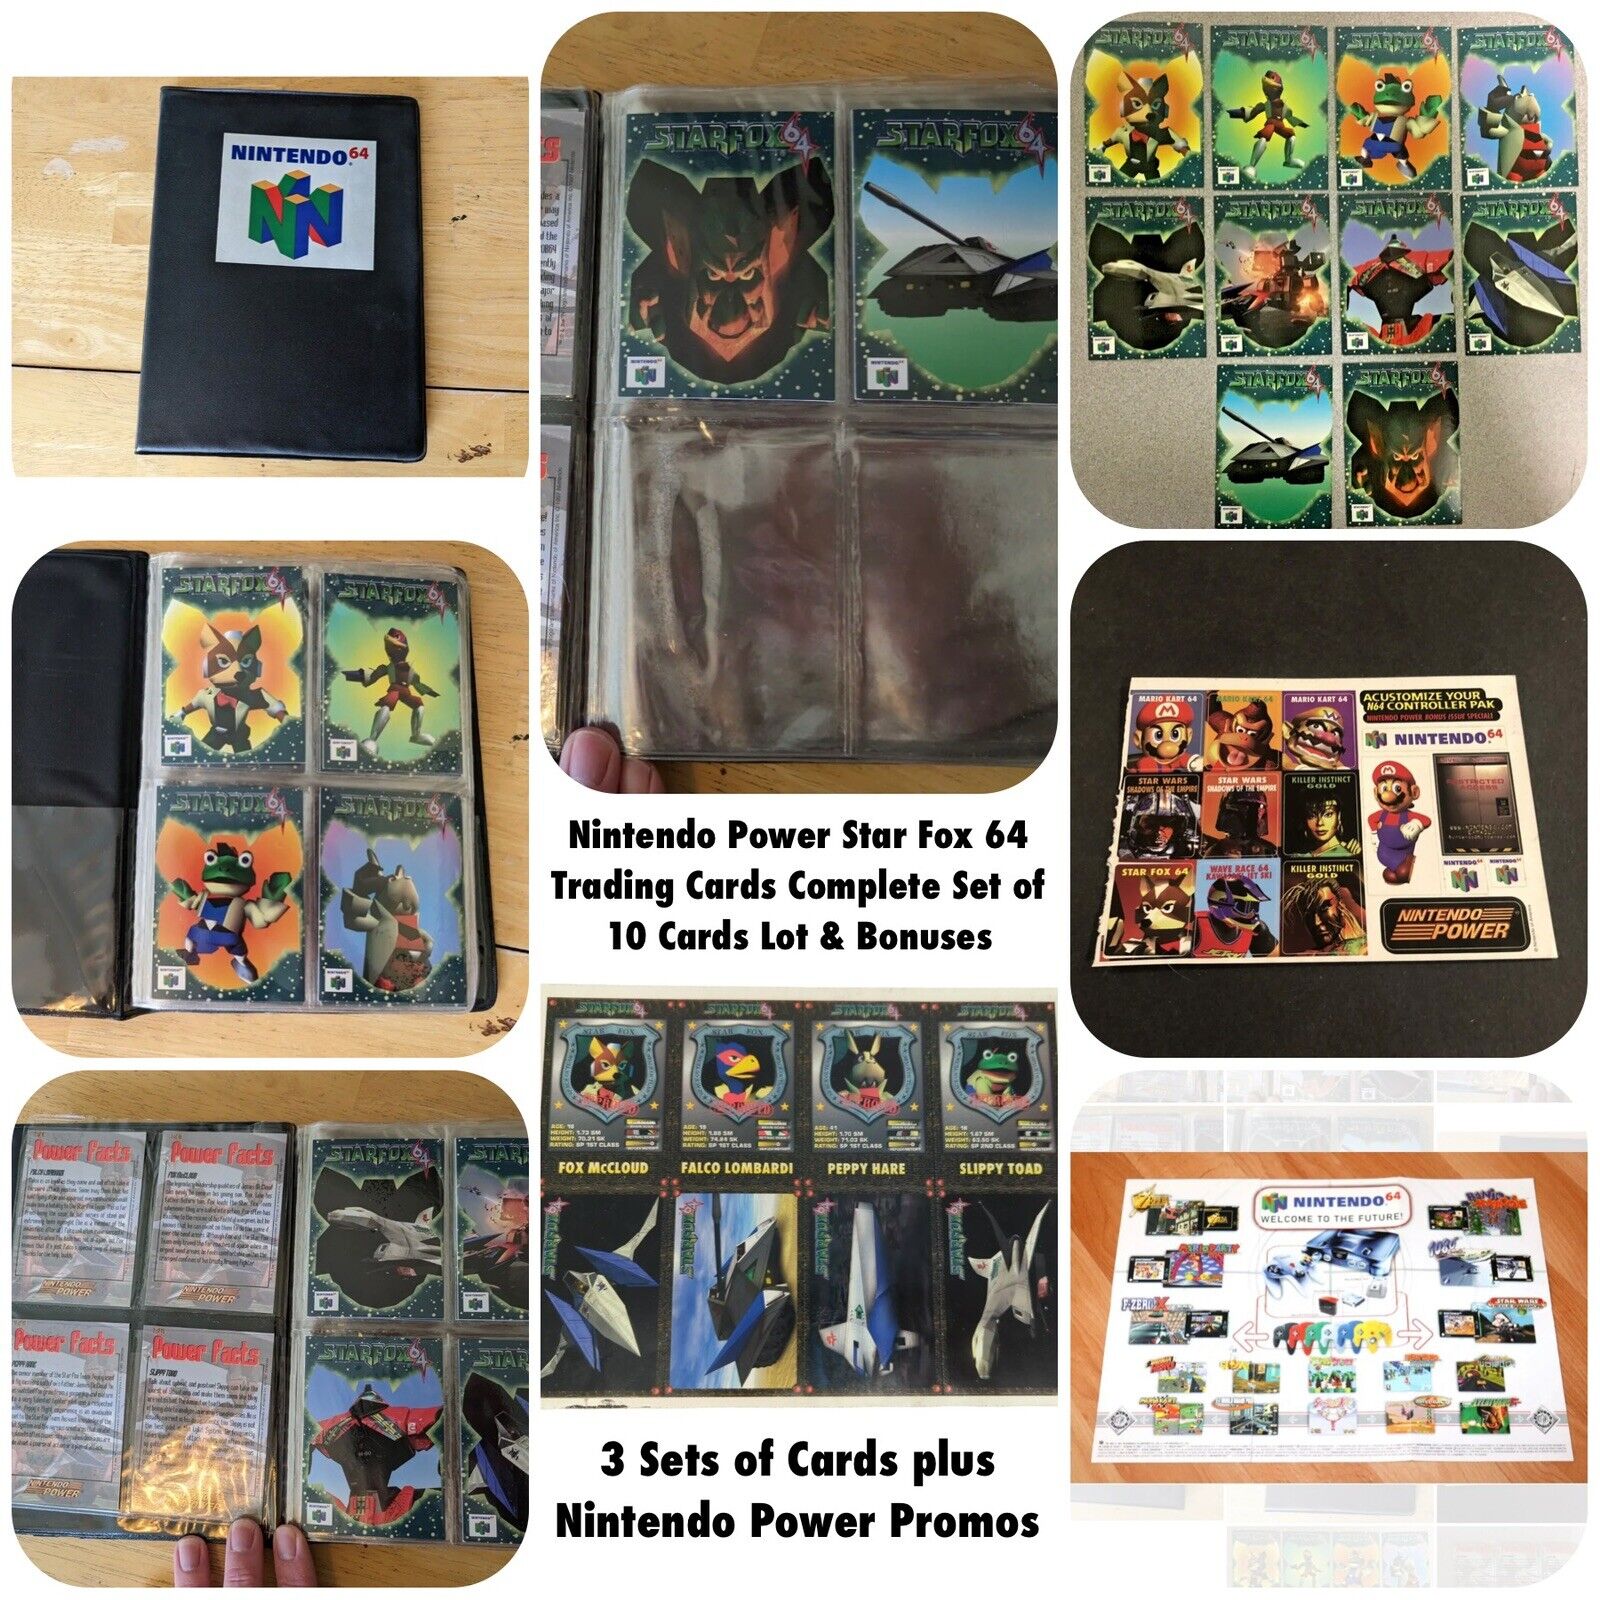 Nintendo Power Star Fox 64 Trading Cards Complete Set of 10 Cards Lot & Bonuses